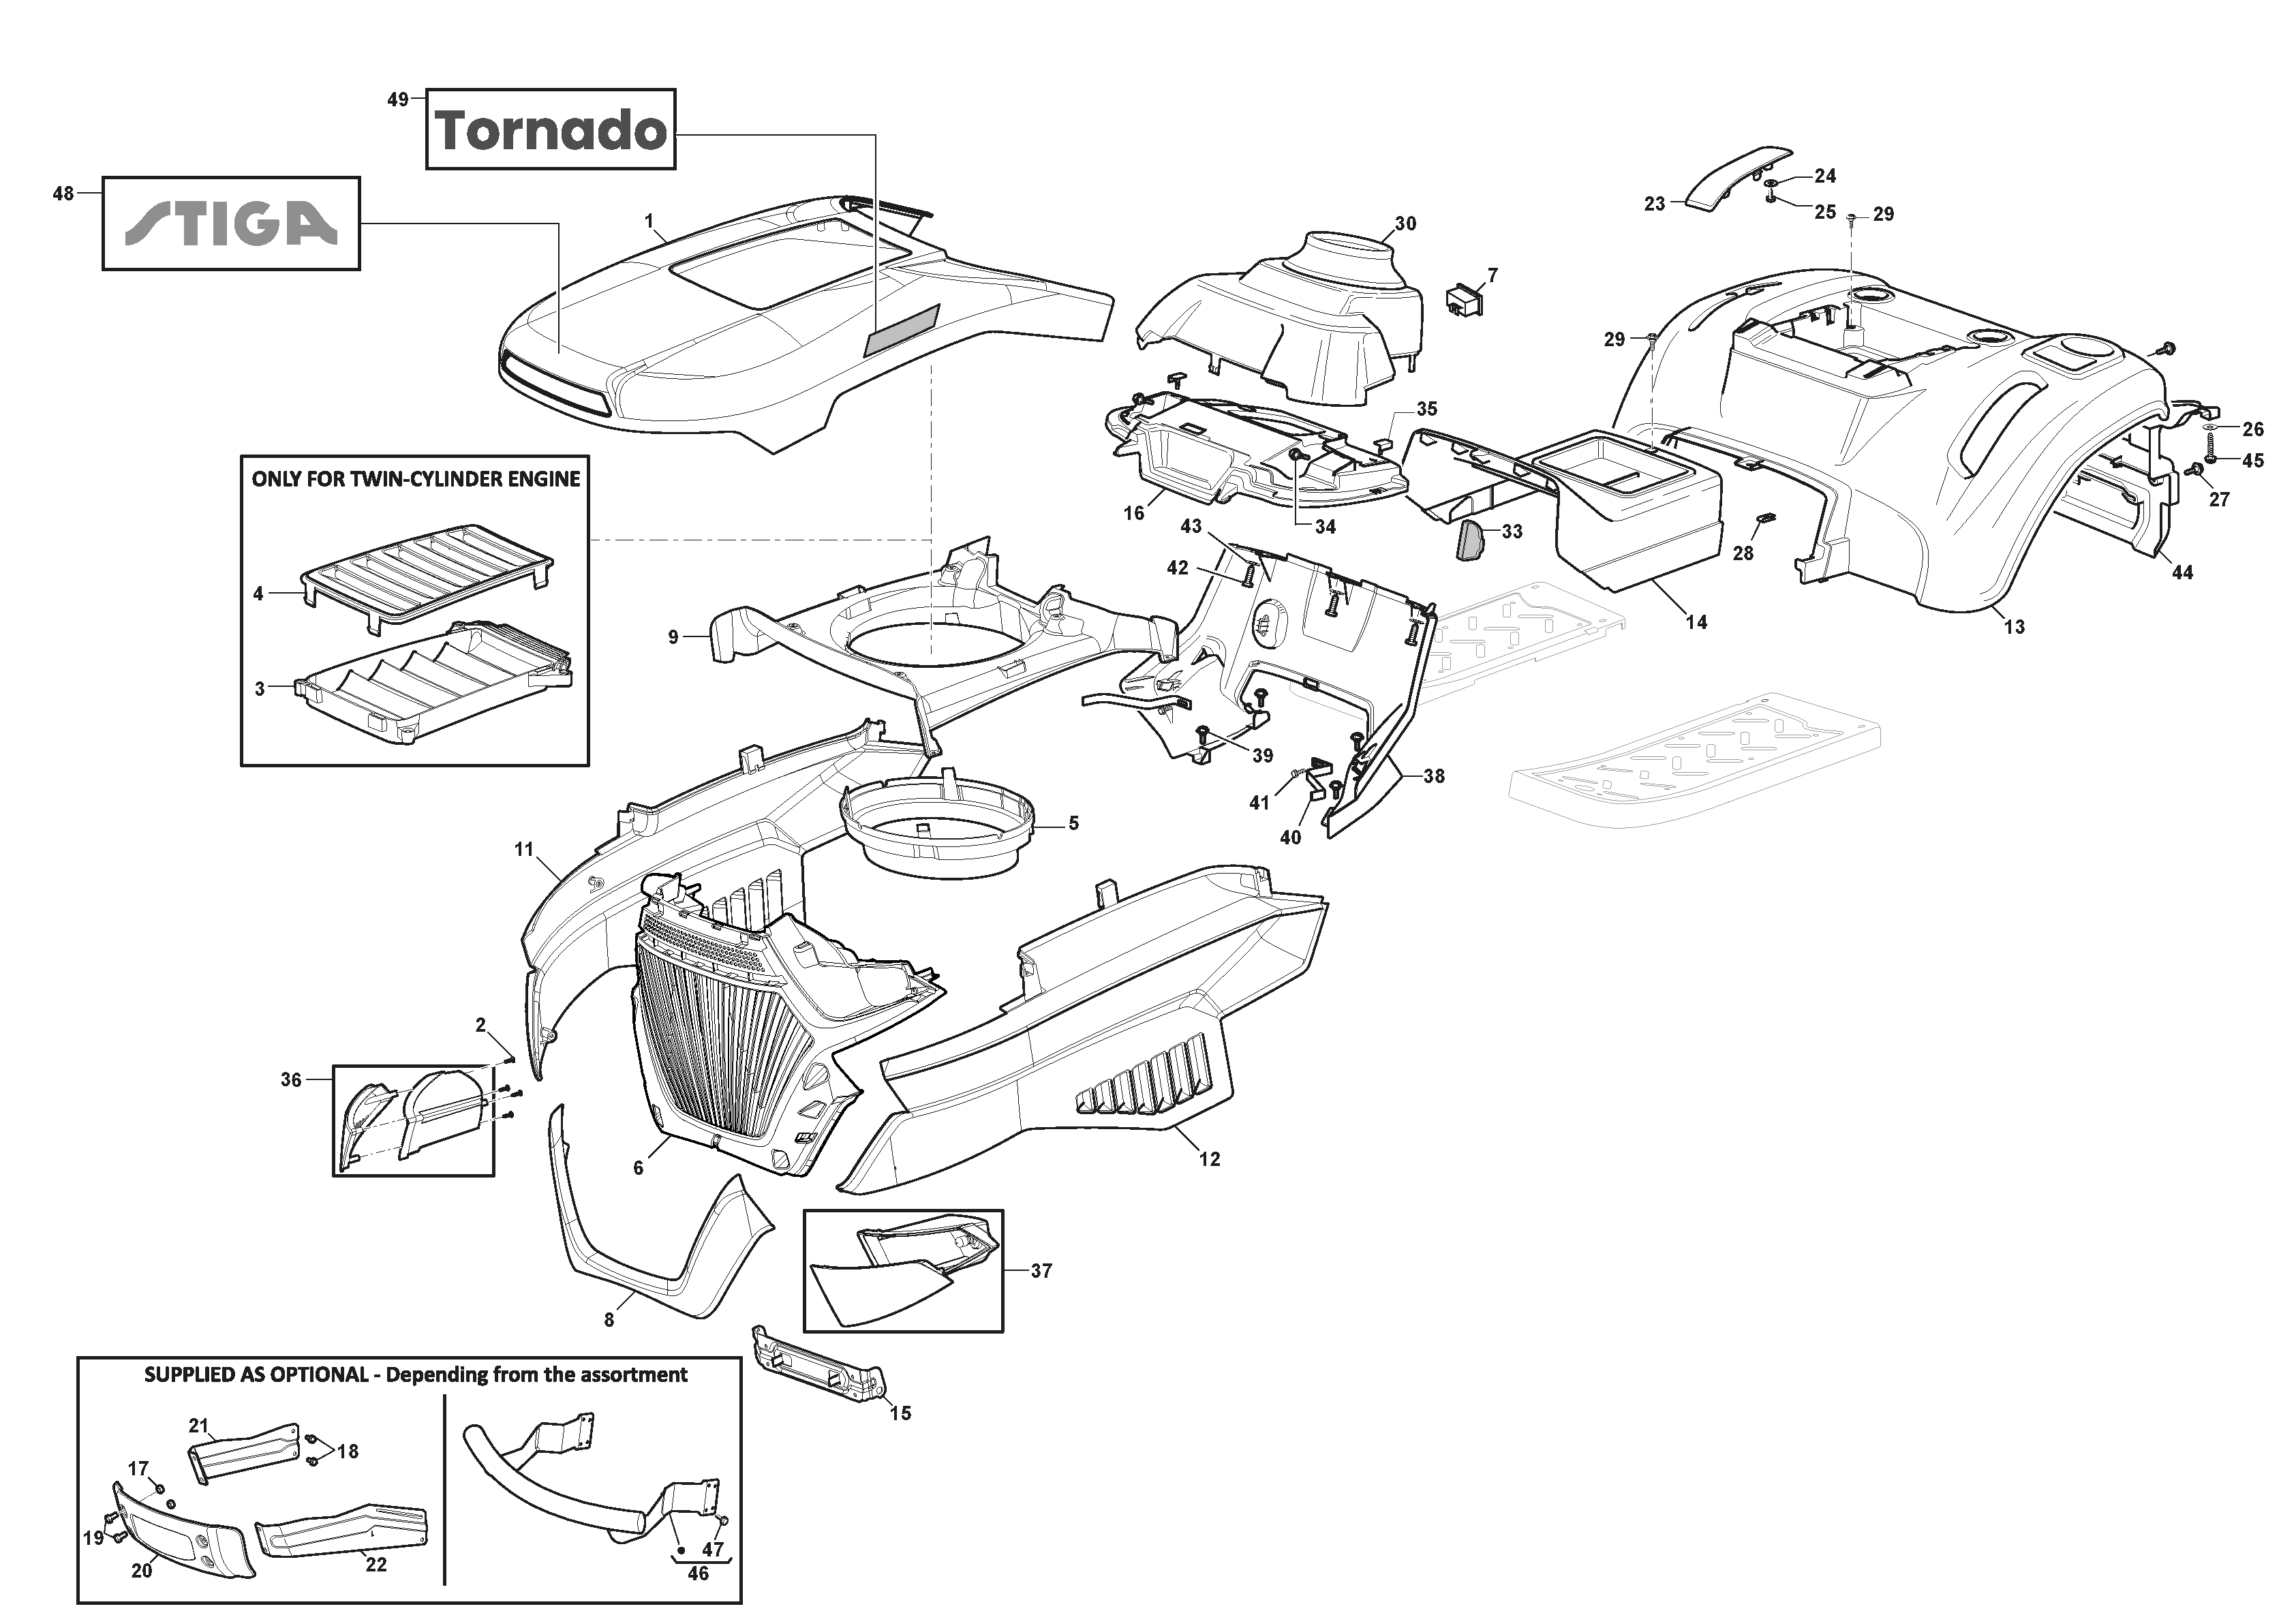 Stiga Tornado 5108 W - Bodywork - ABS Aesthetic Parts